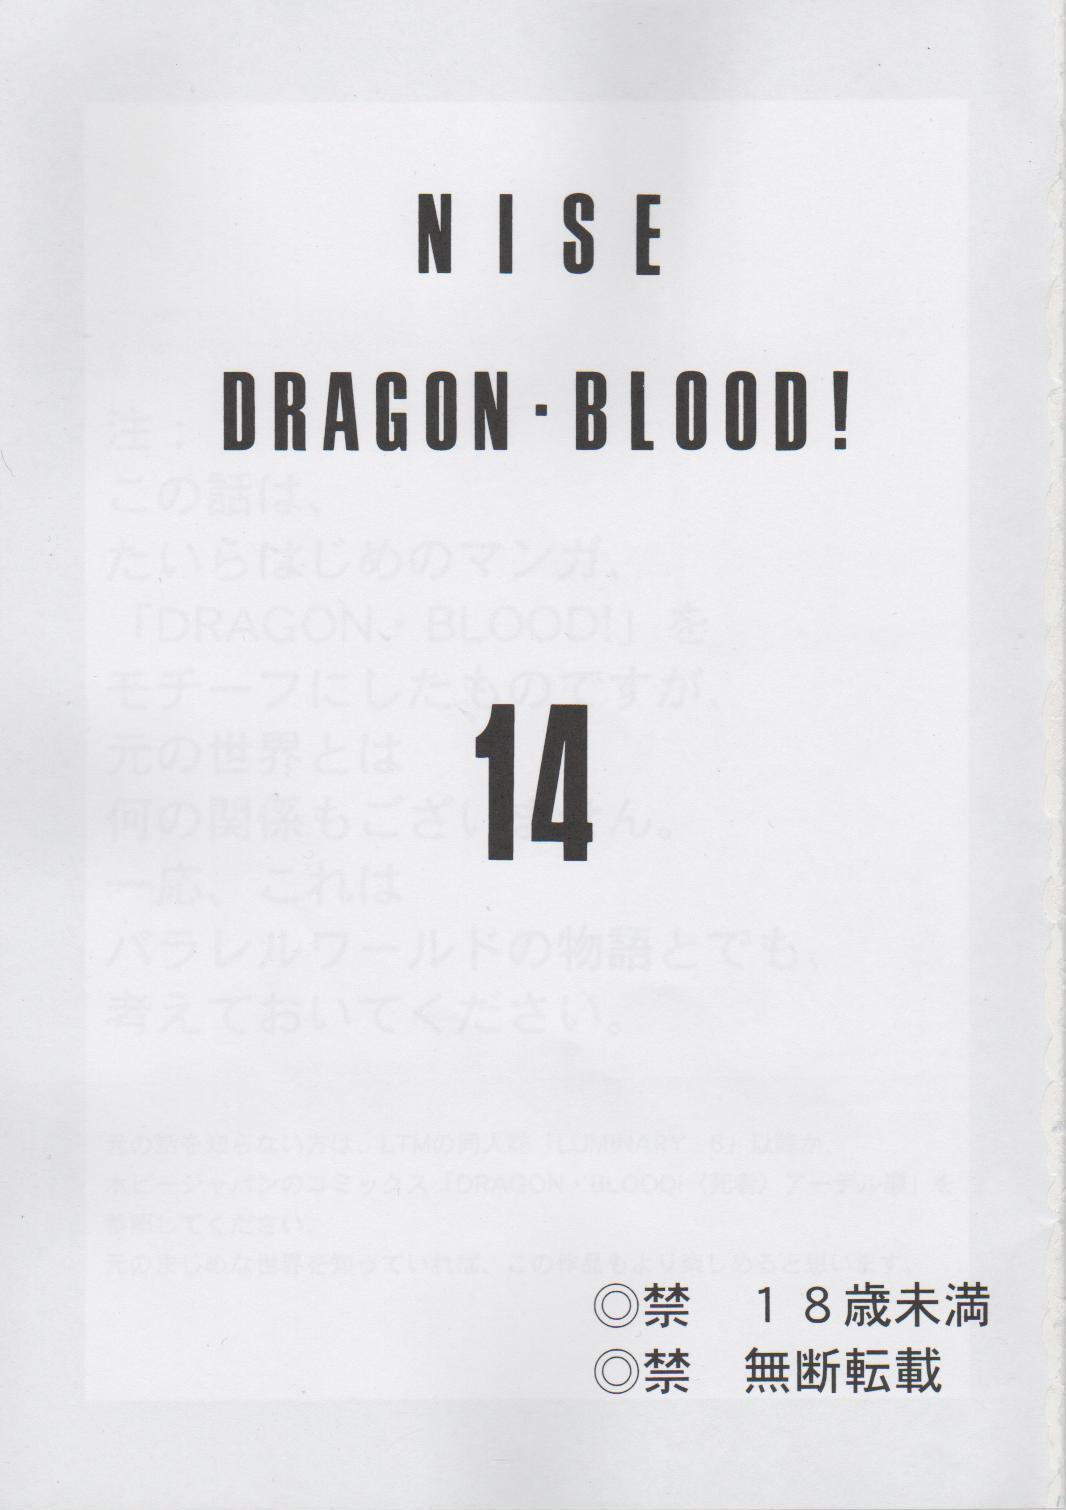 NISE Dragon Blood! 14 1